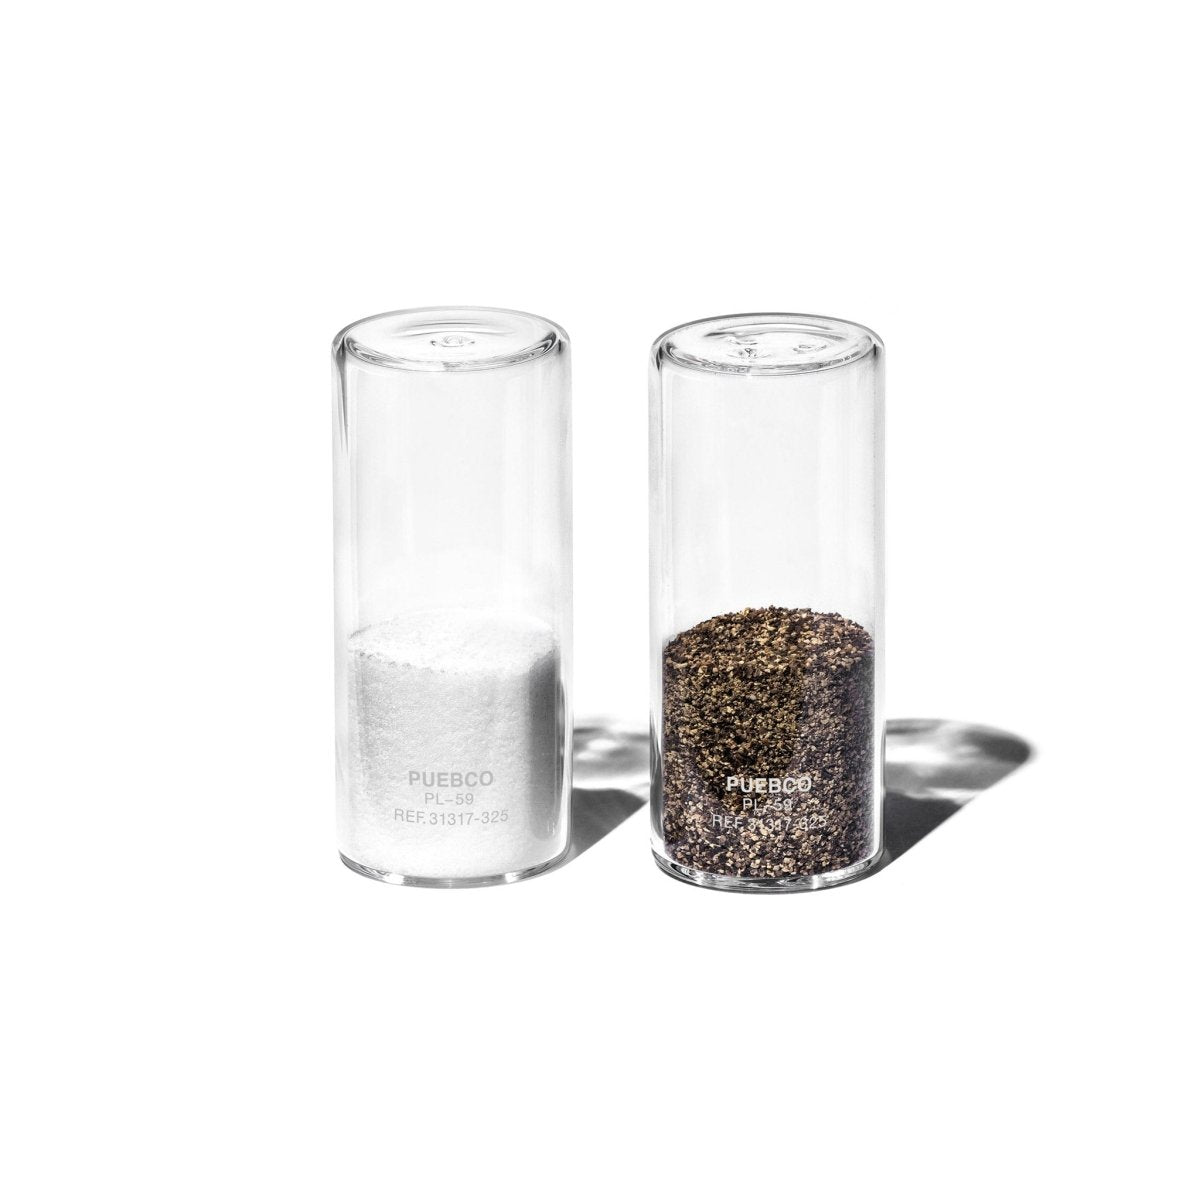 puebco Salt & Pepper Shaker Set - lily & onyx